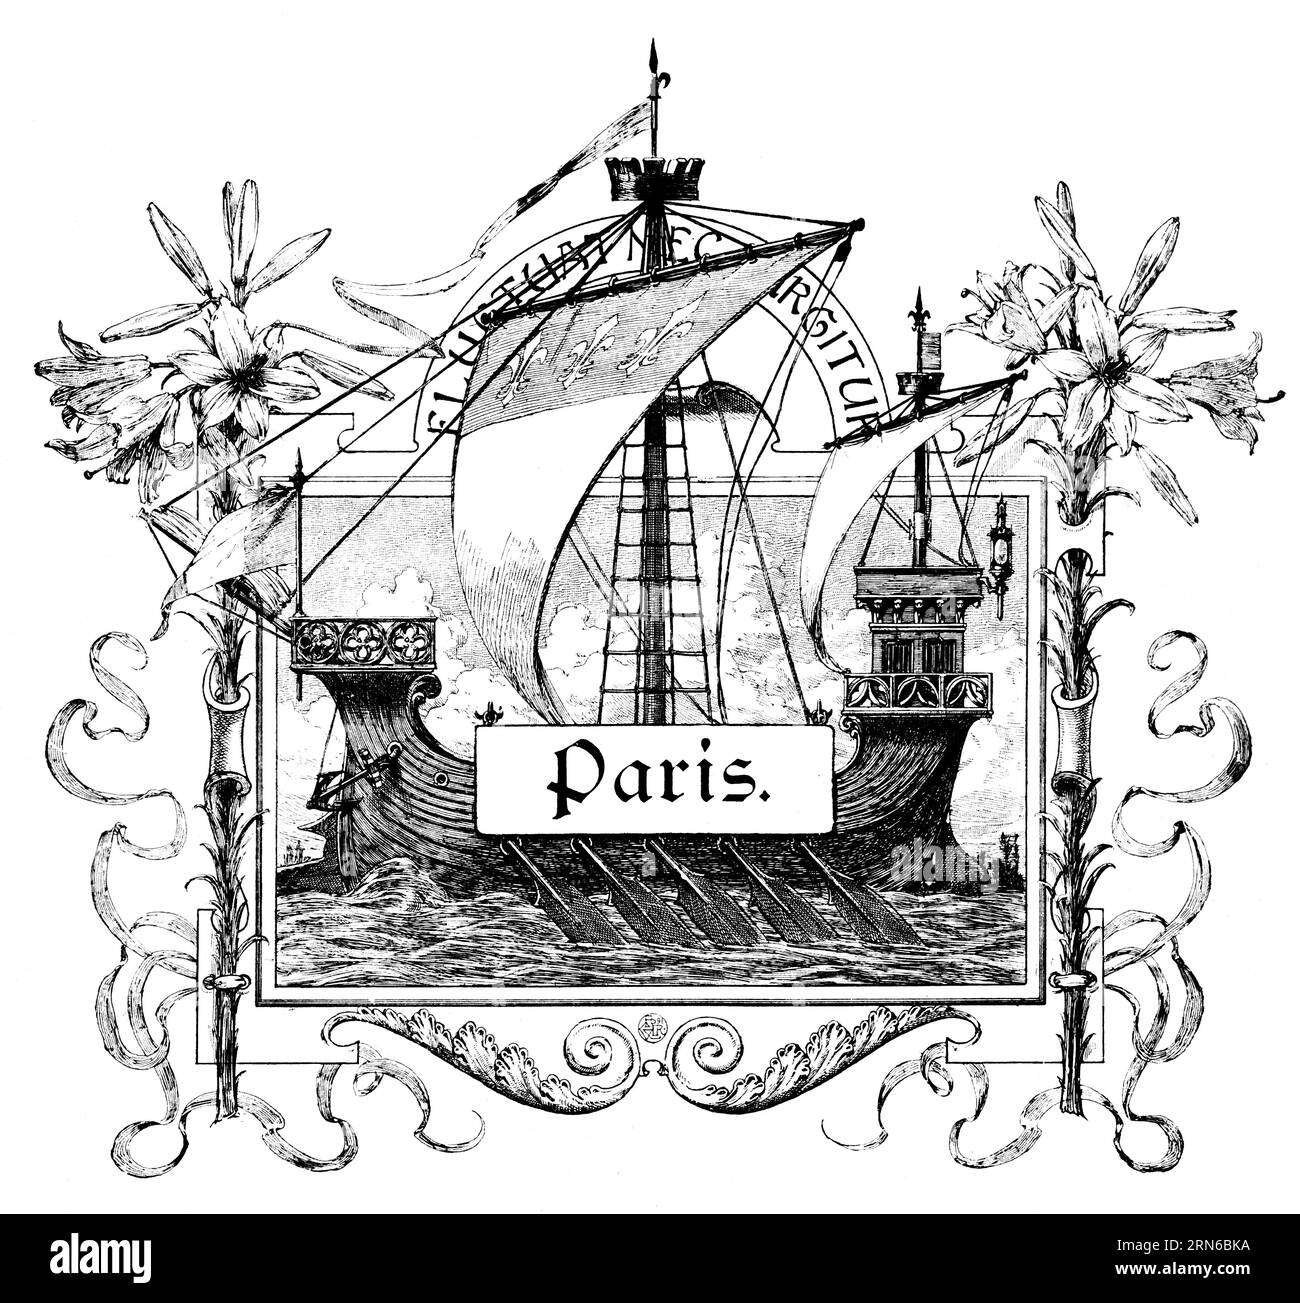 Emblem, symbol image, Paris, galley, inscription, oars, flowers, ornamentation, France, historical illustration circa 1898 Stock Photo